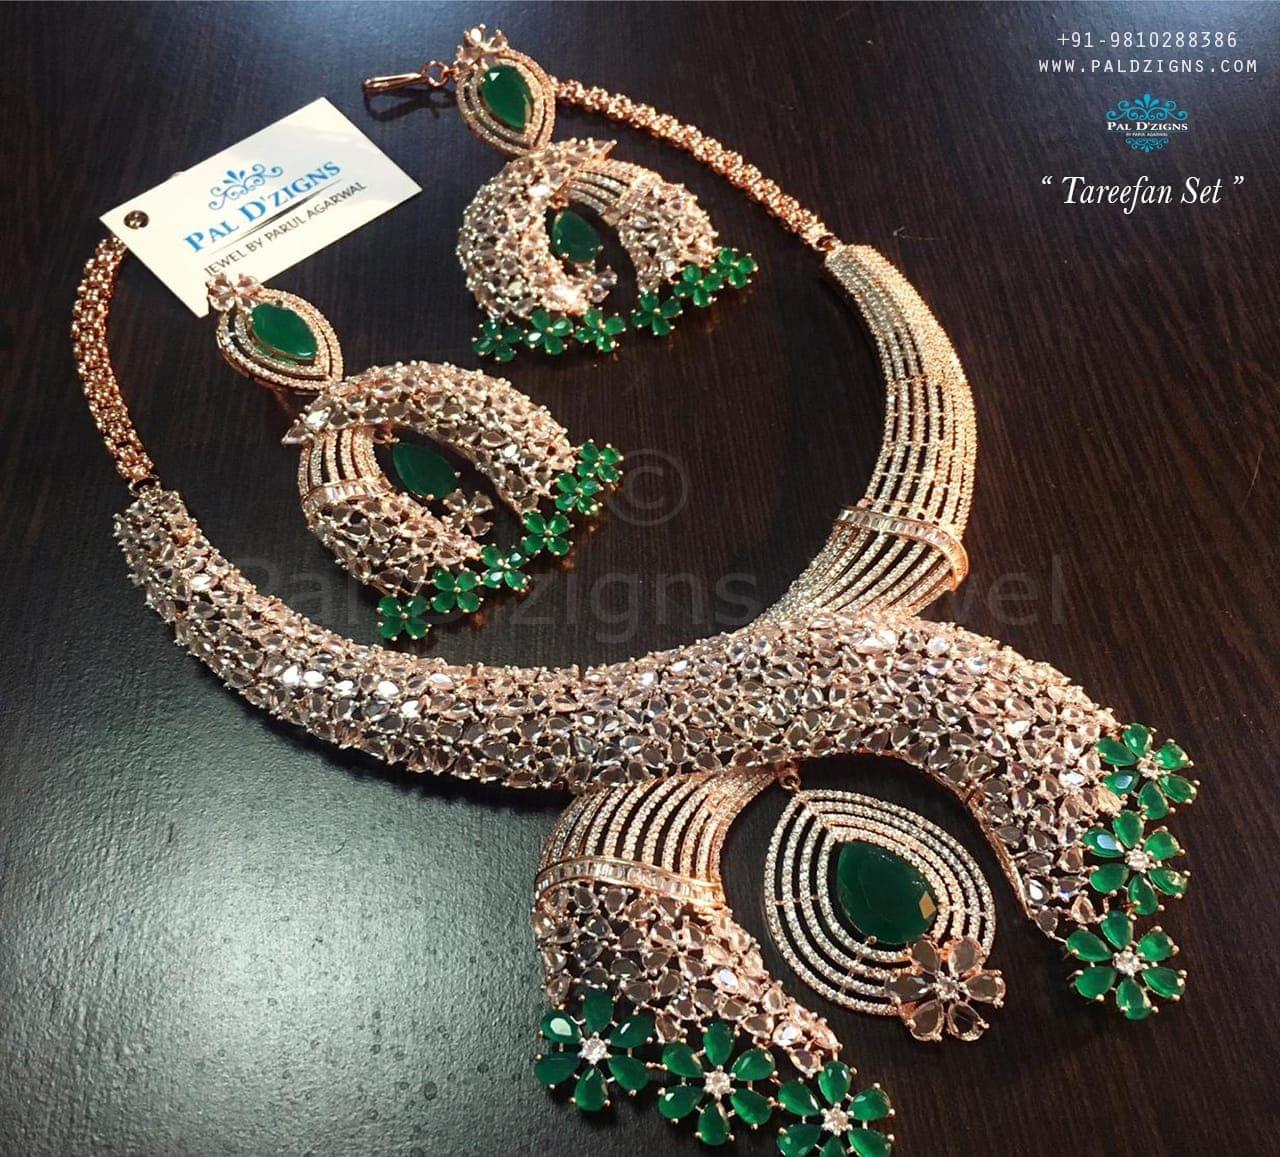 Tareefan Diamond Bridal Necklace set